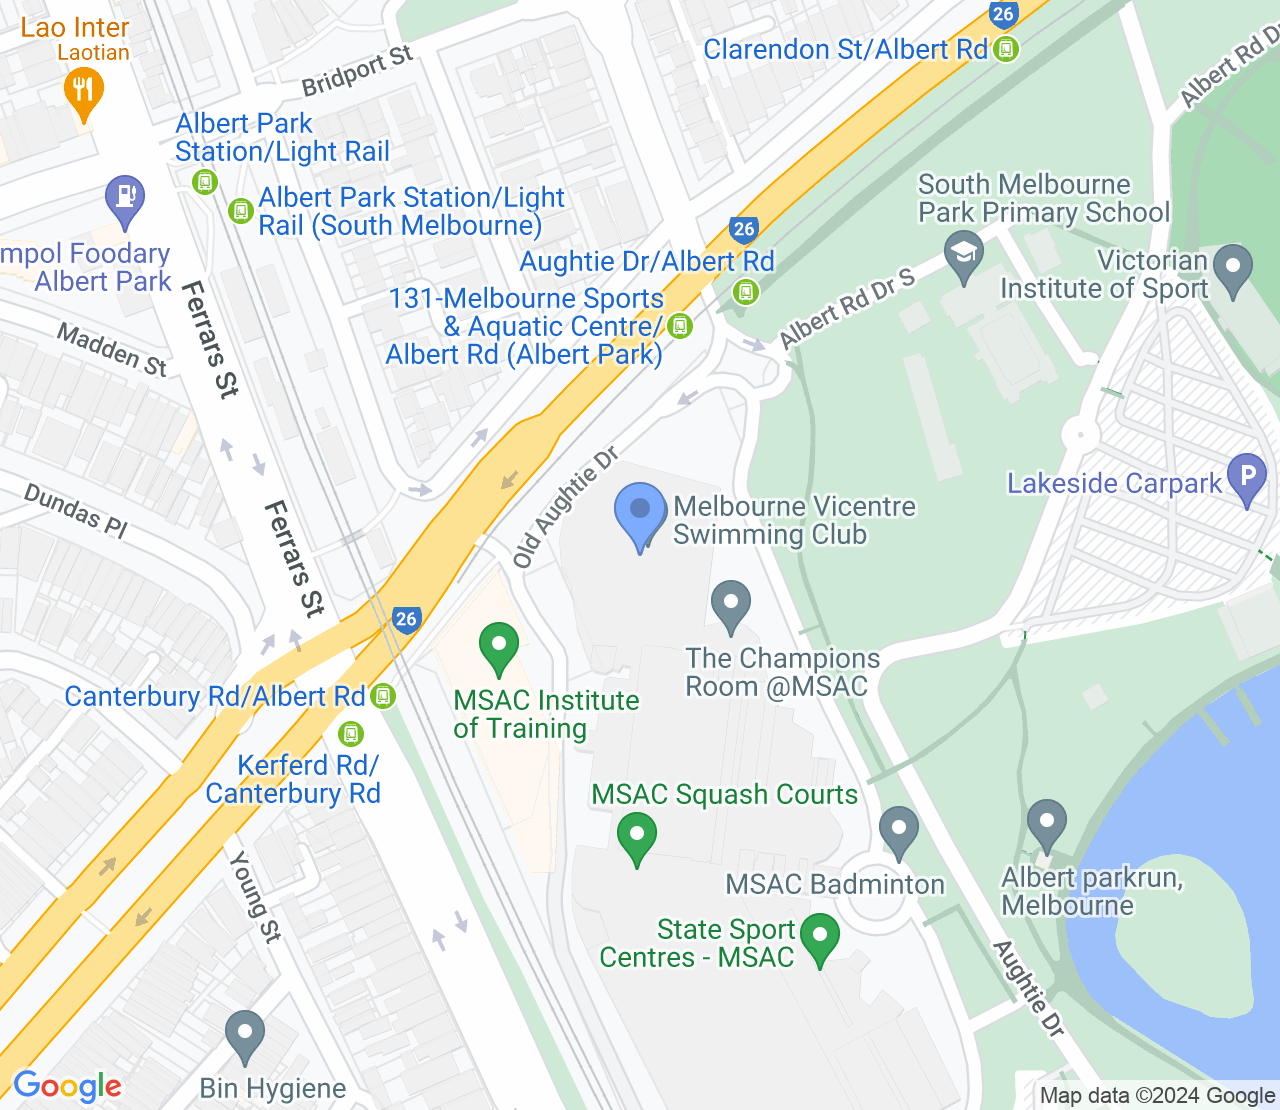 Google Maps image of Melbourne Sports and Aquatic Centre